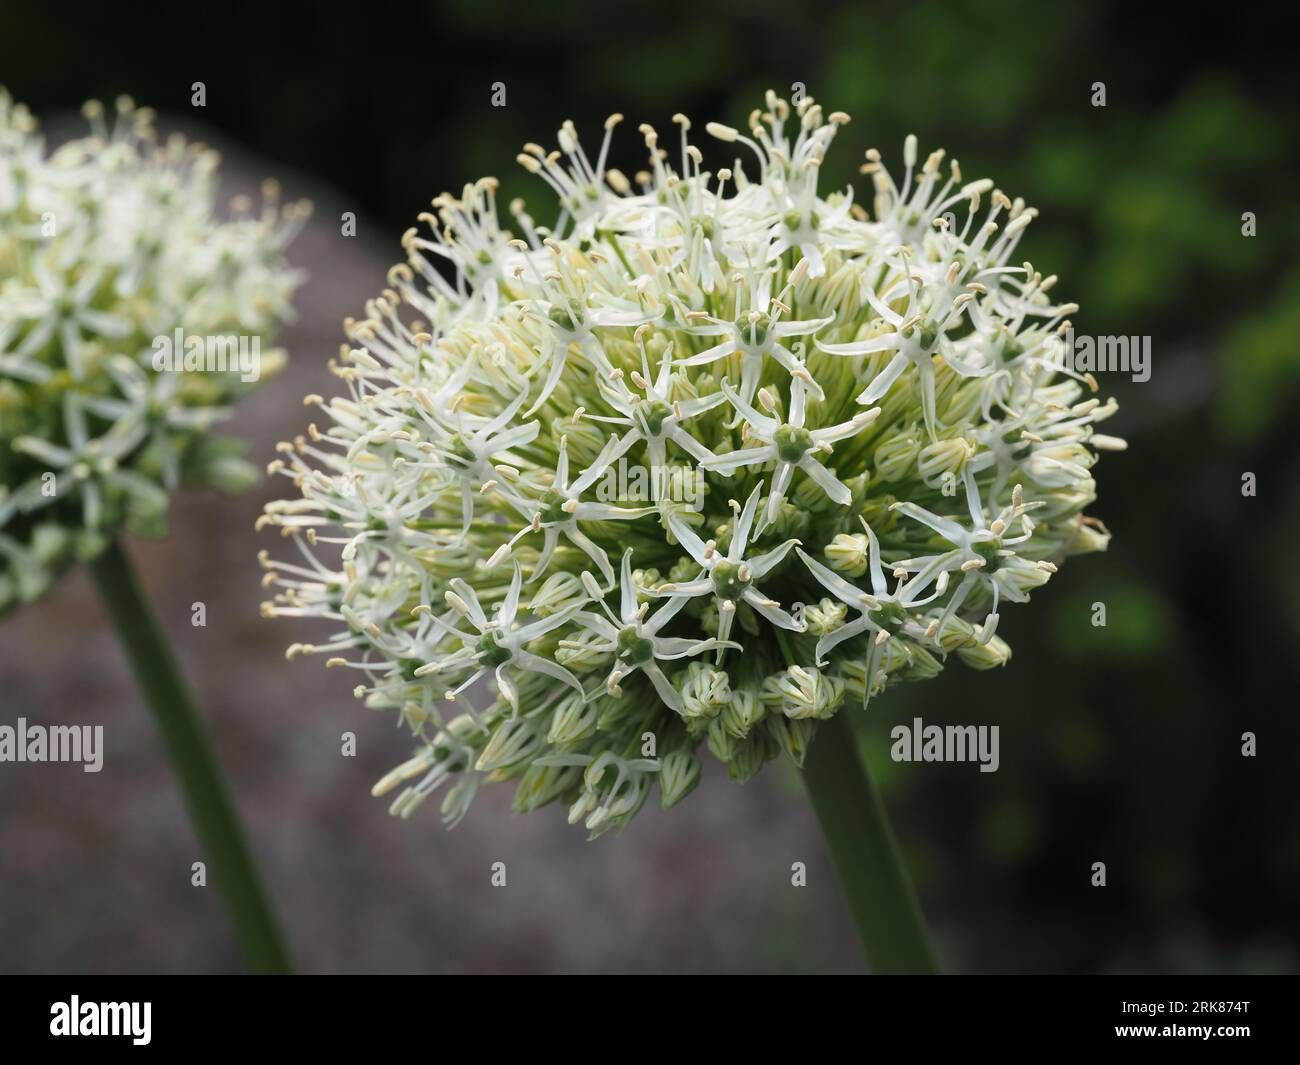 'White Giant' (Ornamental Onion). Scientific name: Allium stipitatum. Higher classification: Allium. Family: Amaryllidaceae. Order: Asparagales. Stock Photo